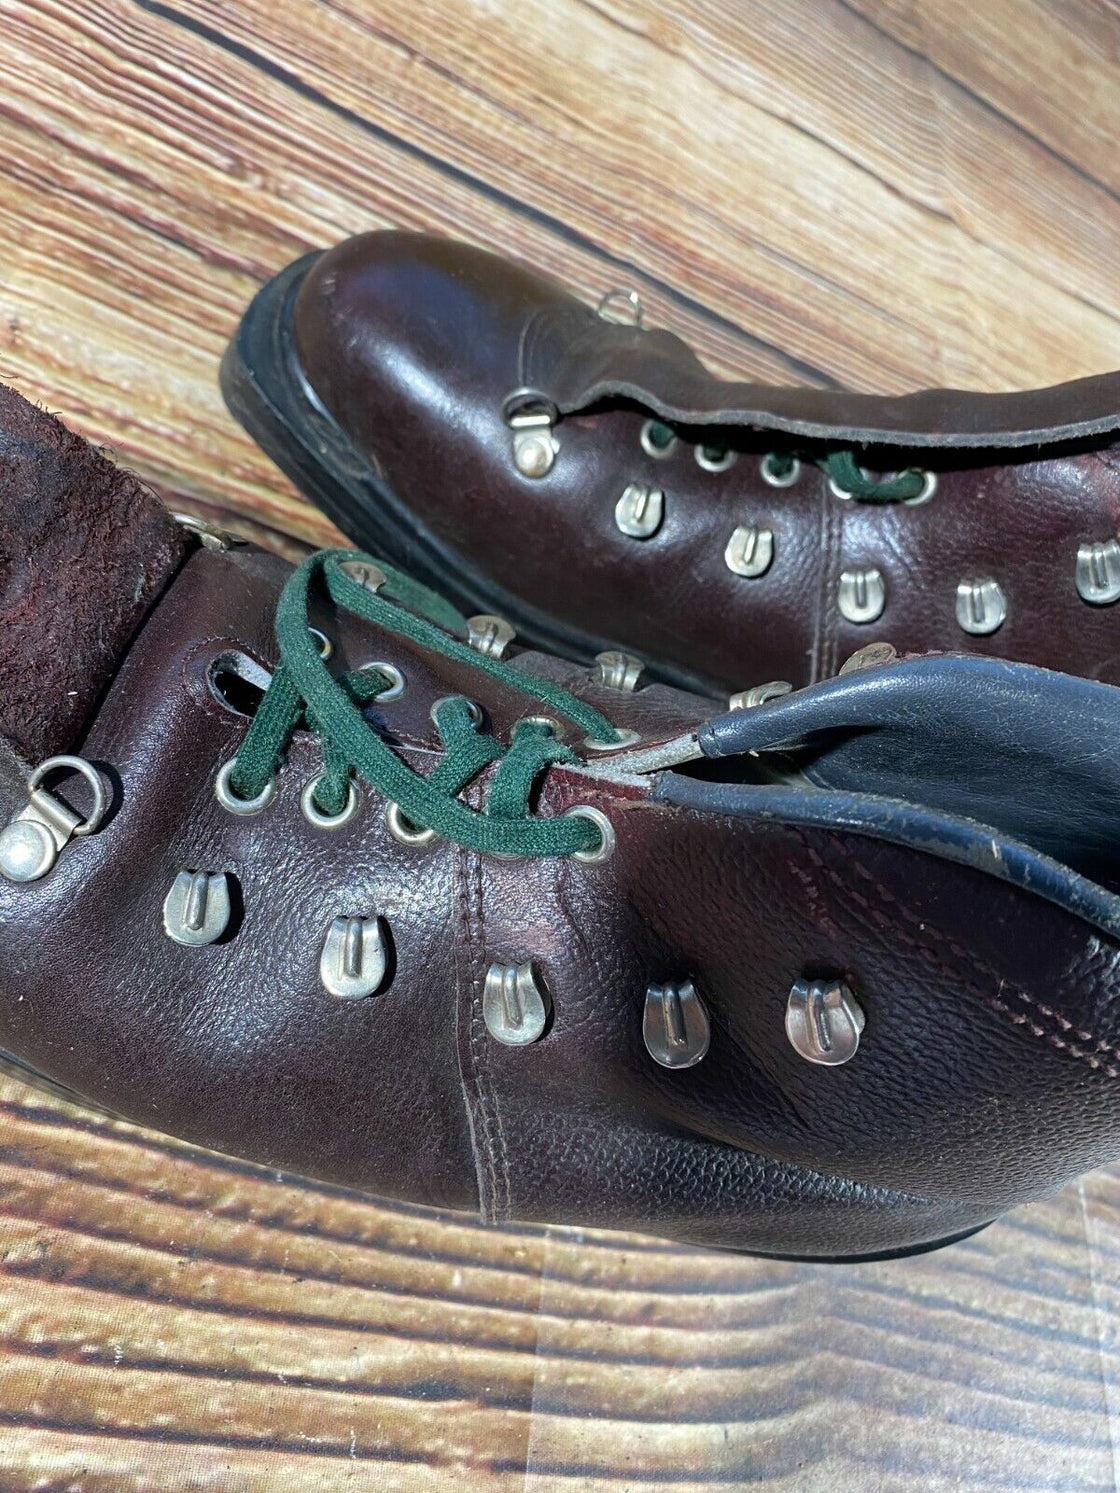 Vintage Alpine Ski Boots EU41, US7.5, UK7, Mondo 258 for Cable Bindings